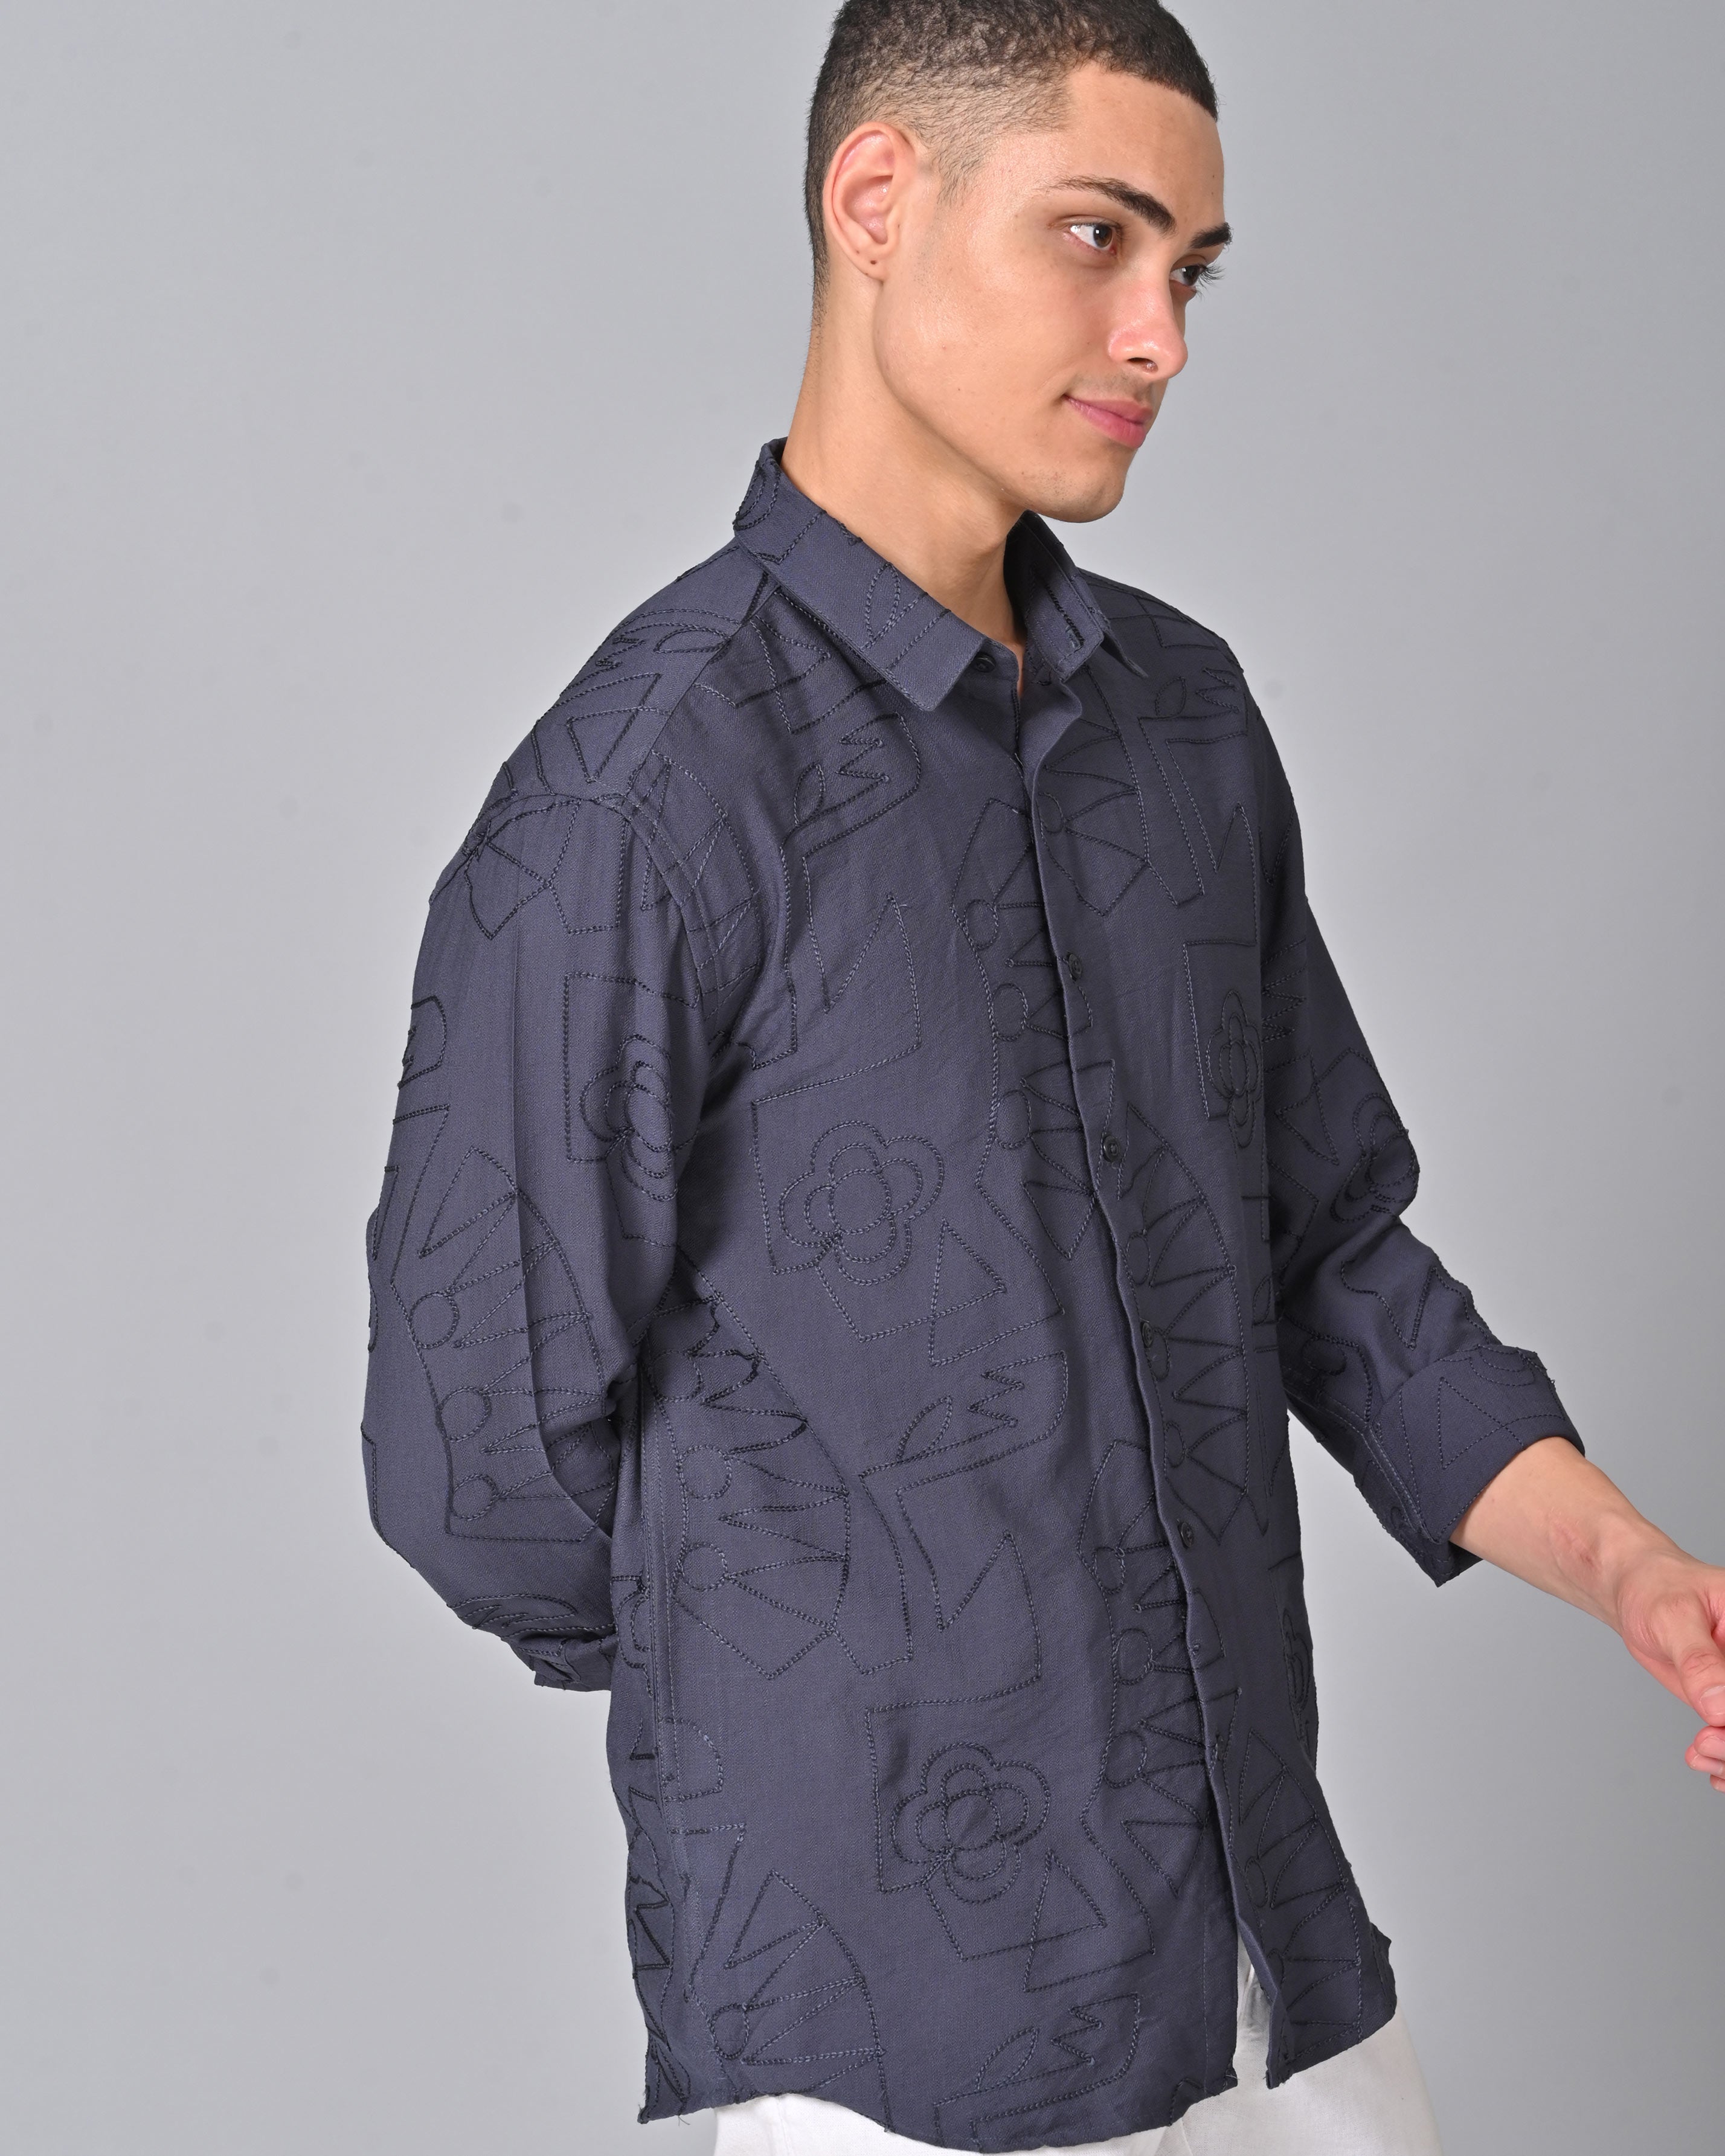 Buy Men's Embroidered Dark Blue Shirt